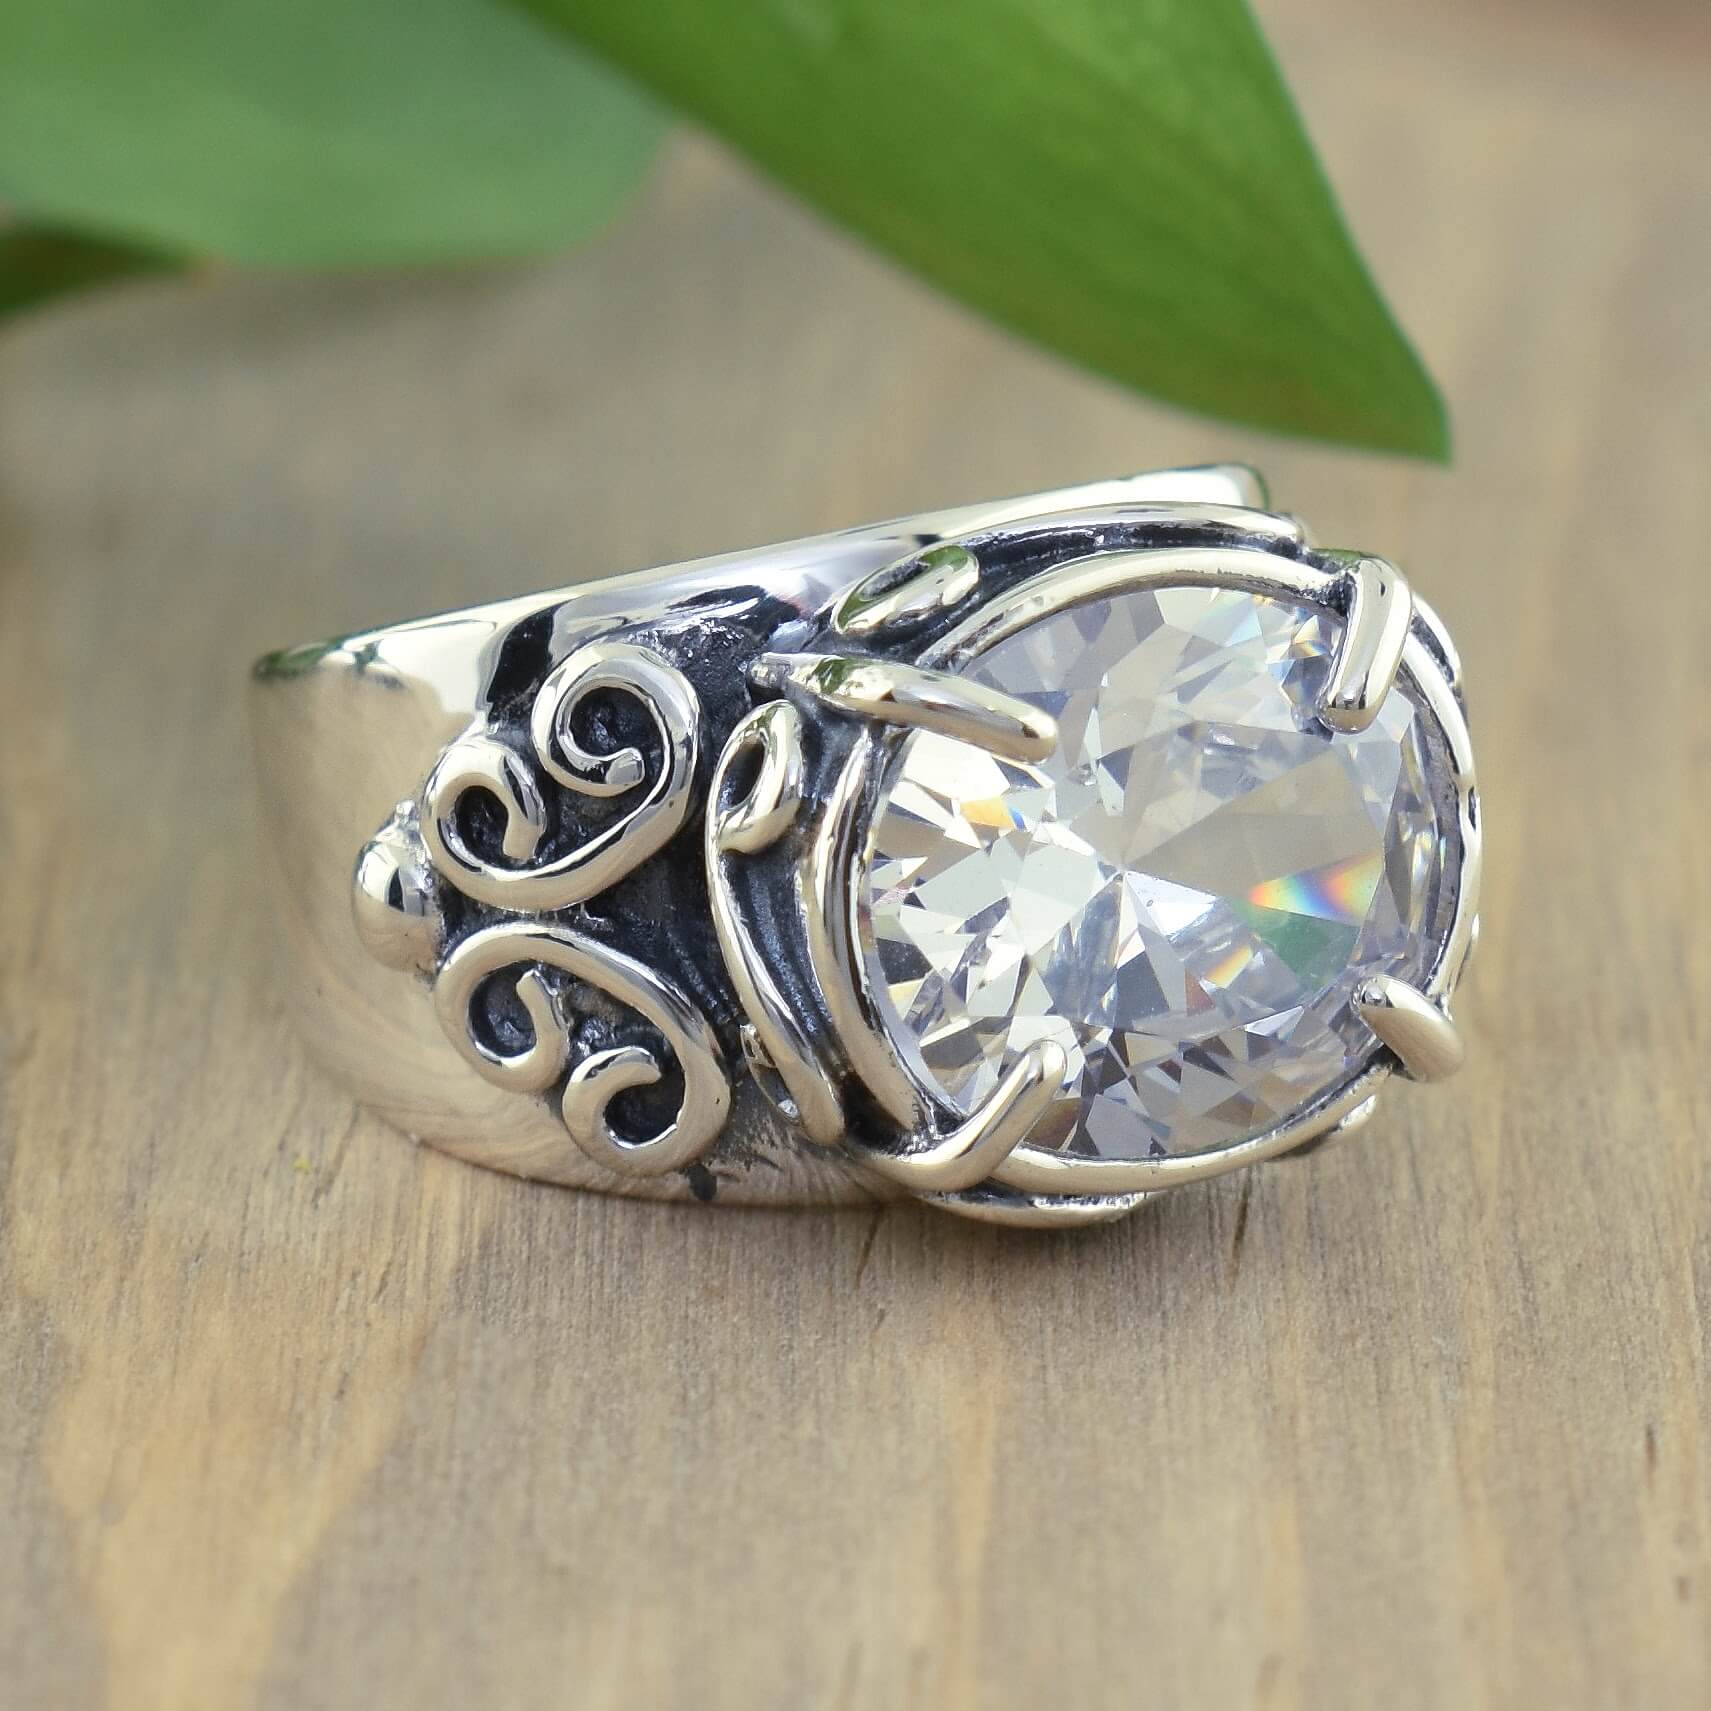 Buy Sterling Silver Jewelry Online | Beautiful Designs | Wide